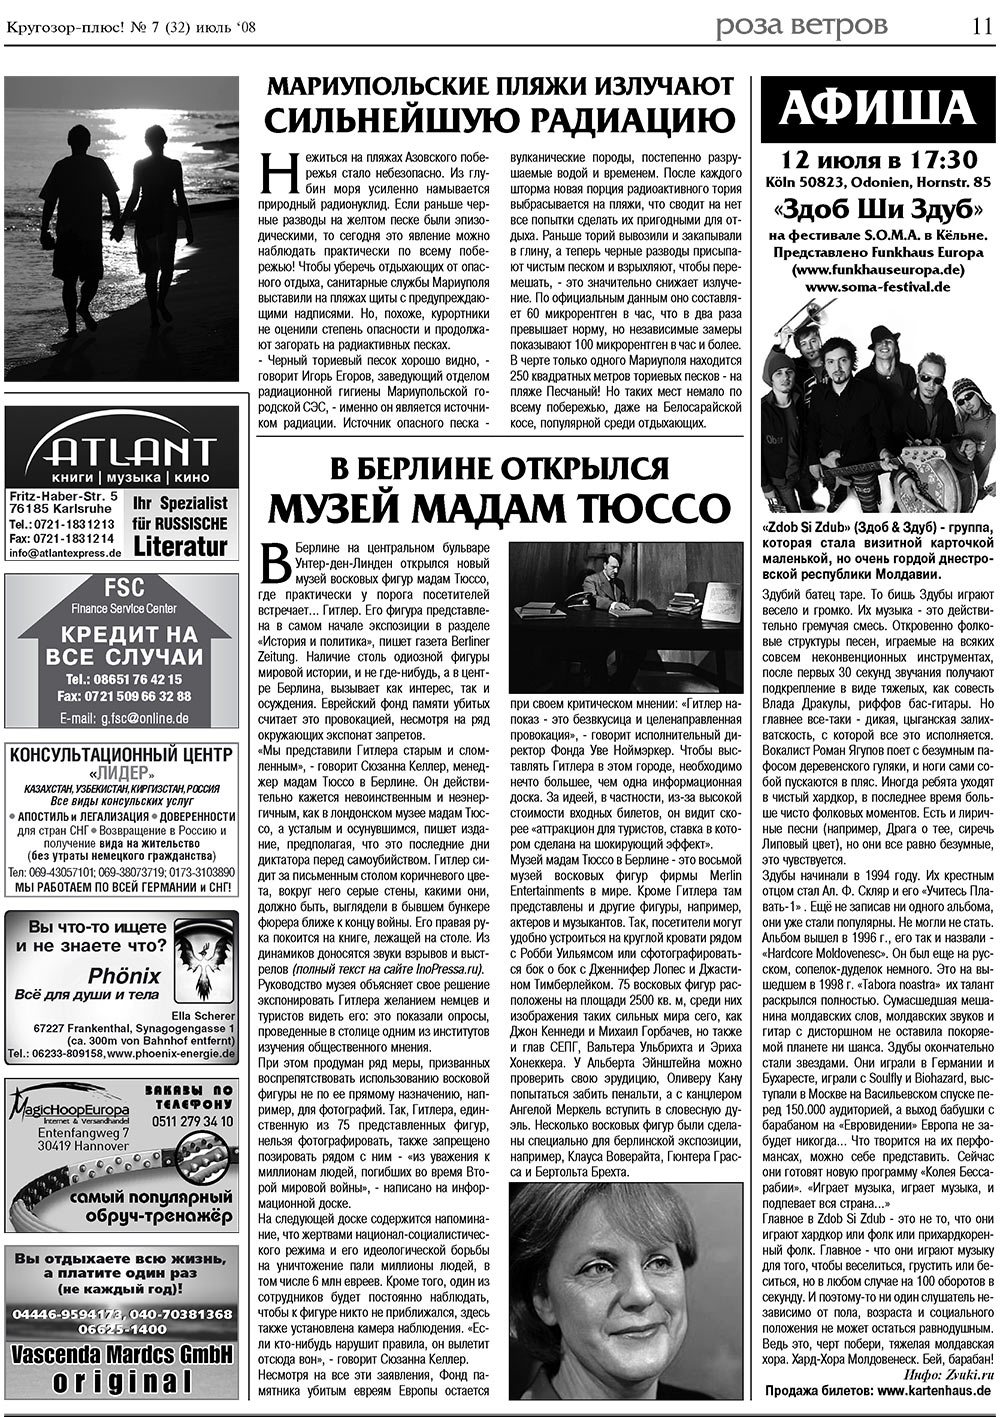 Кругозор плюс! (газета). 2008 год, номер 7, стр. 11